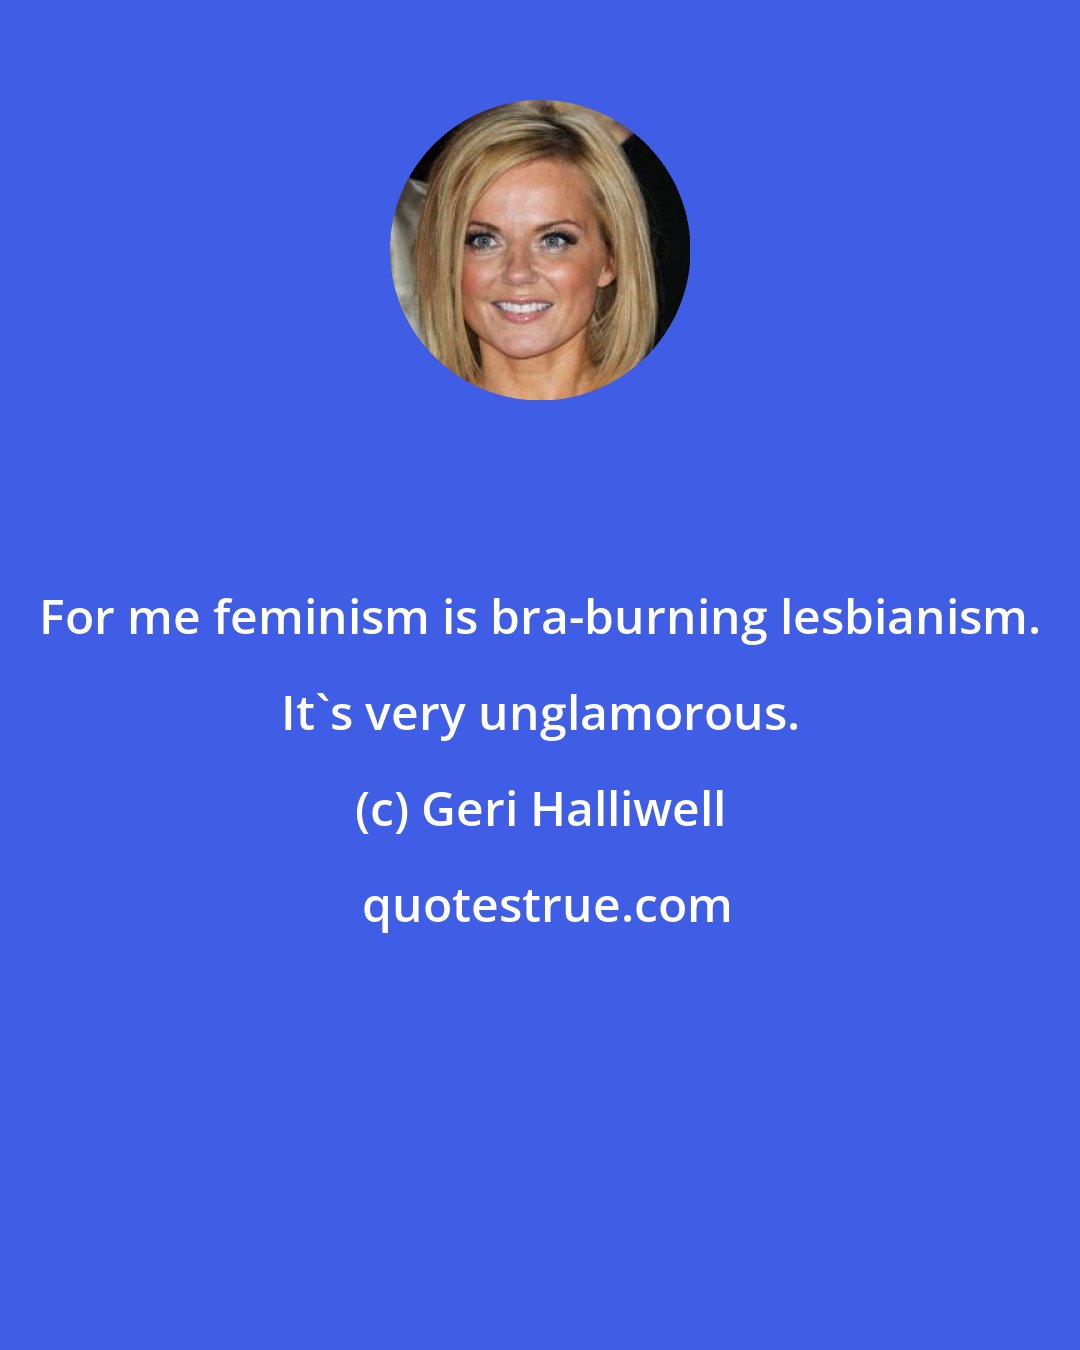 Geri Halliwell: For me feminism is bra-burning lesbianism. It's very unglamorous.